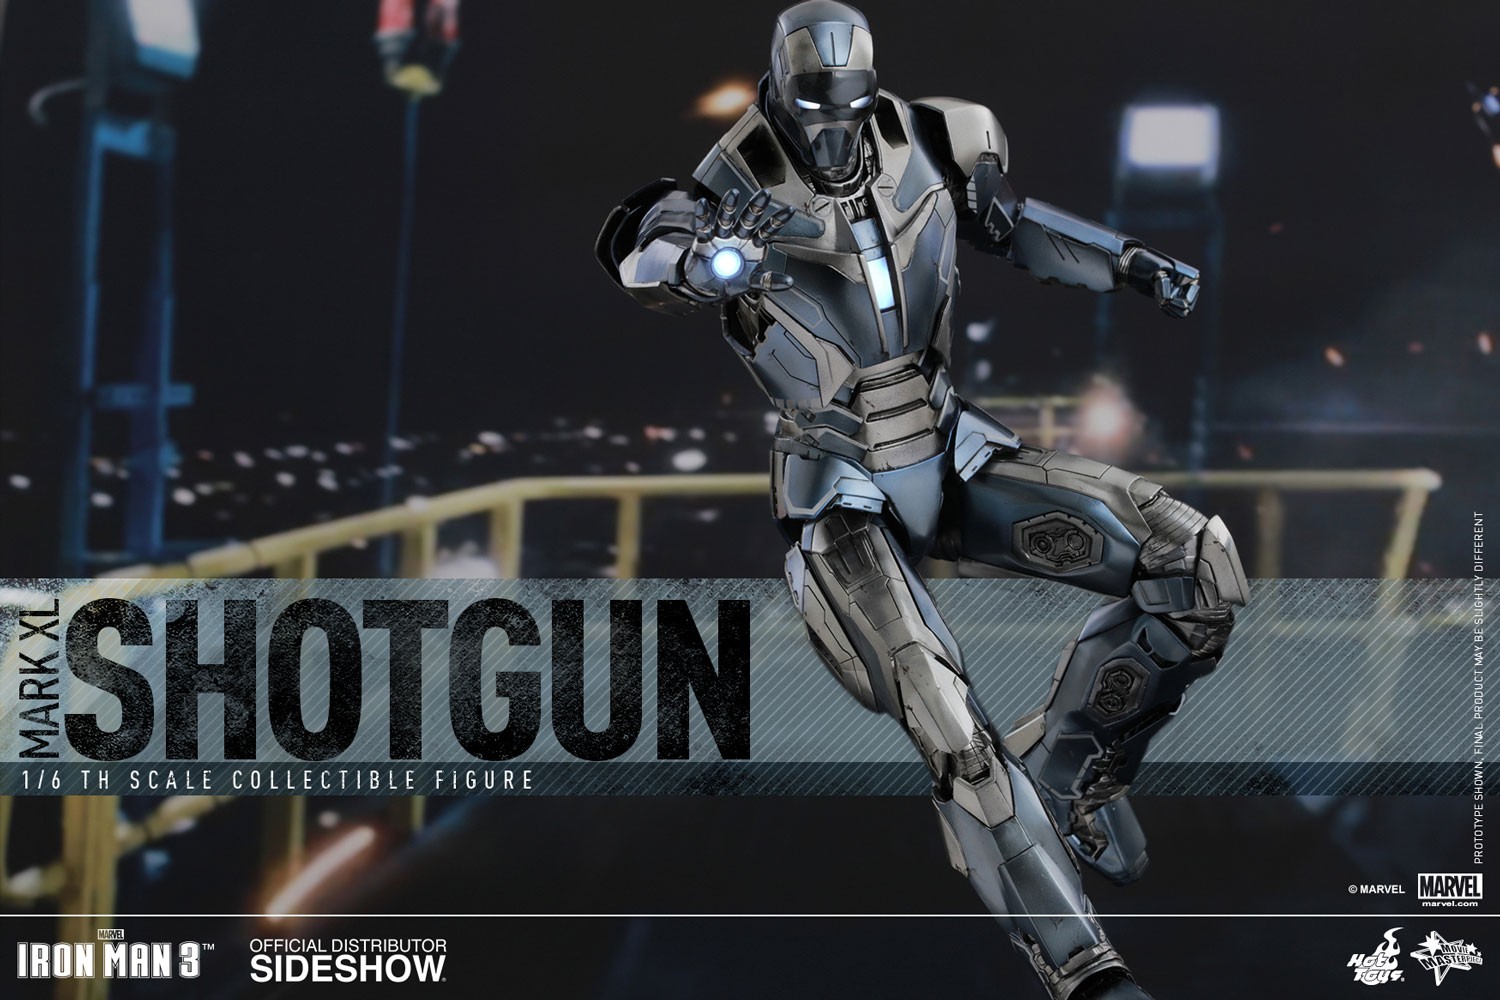 Iron Man Mark XL - Shotgun Collector Edition (Prototype Shown) View 8